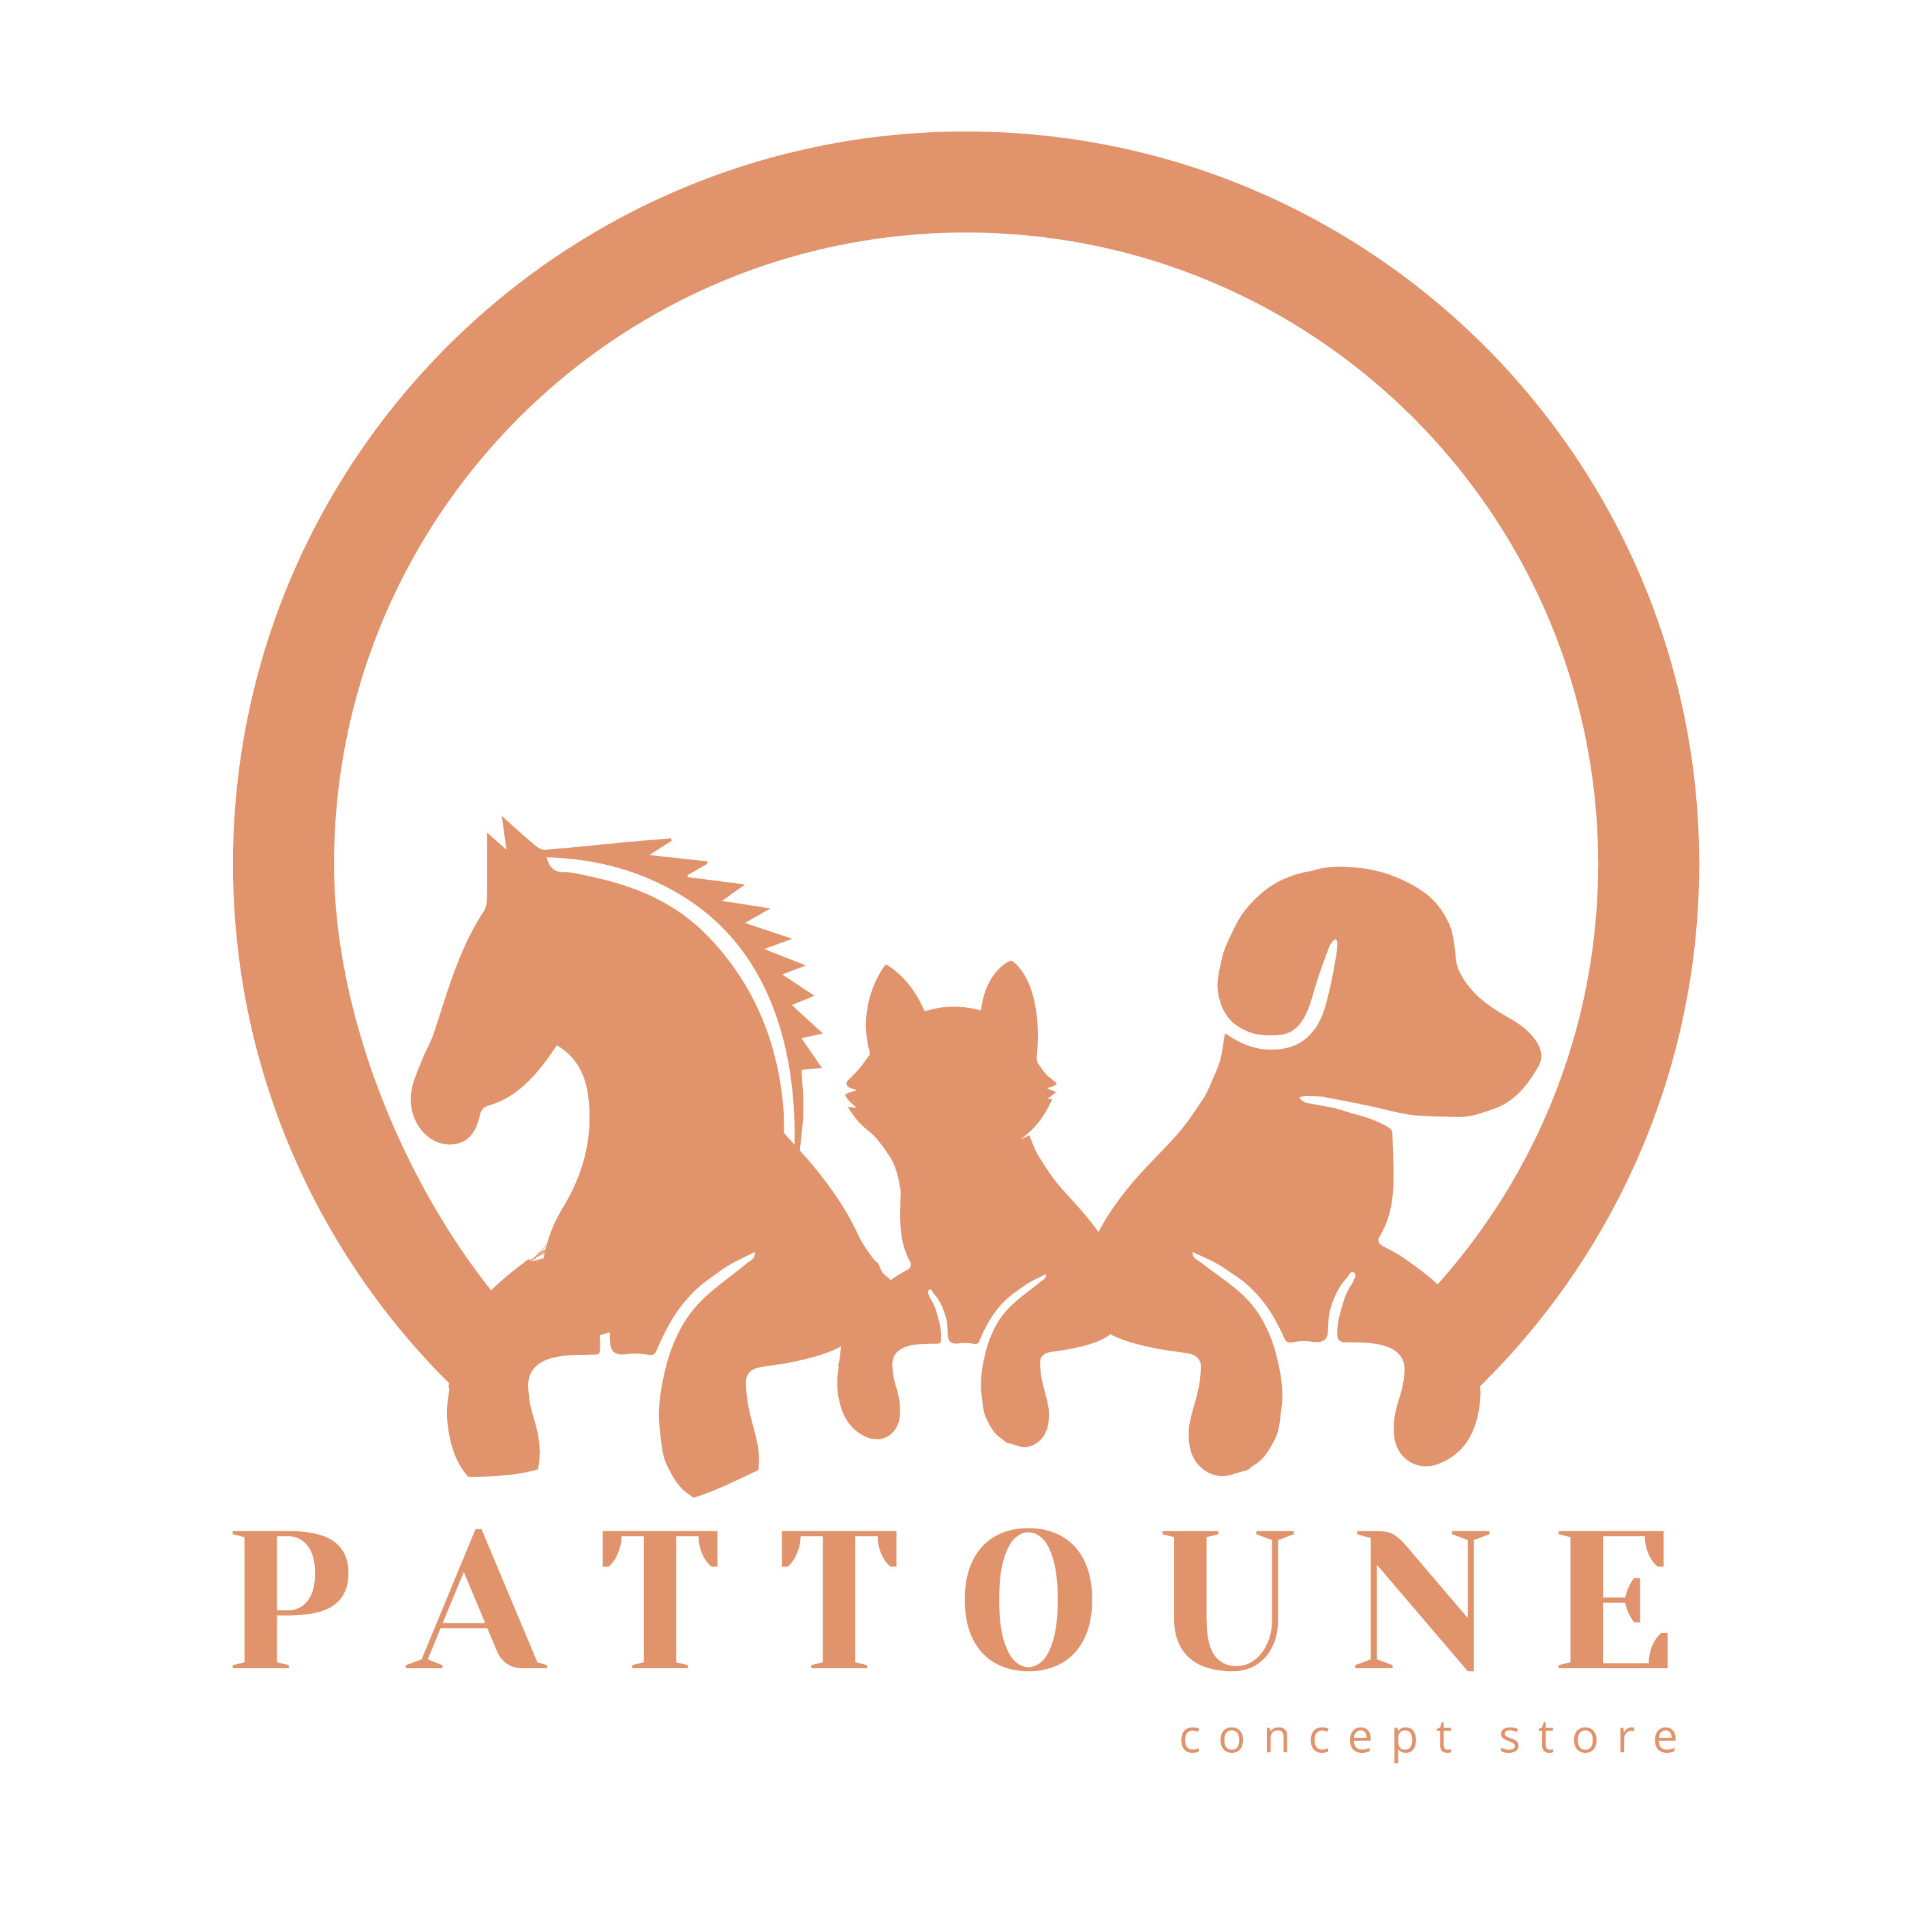 Pattoune